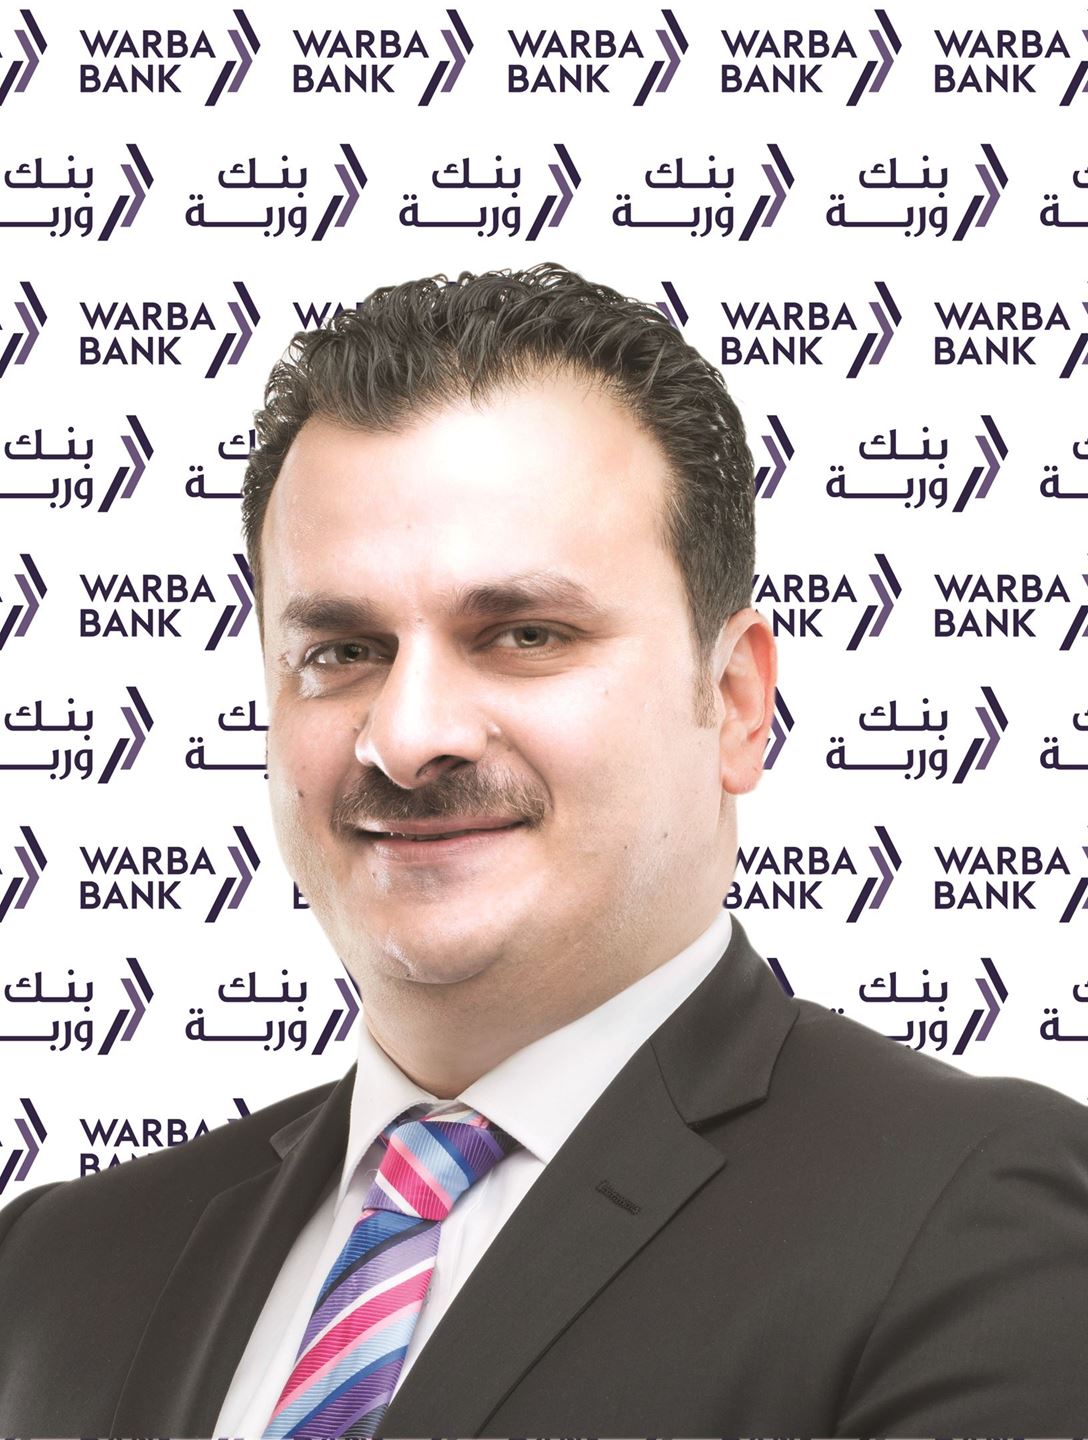 Warba Bank Launches “Hassala”, the Unique Digital Money Box Service